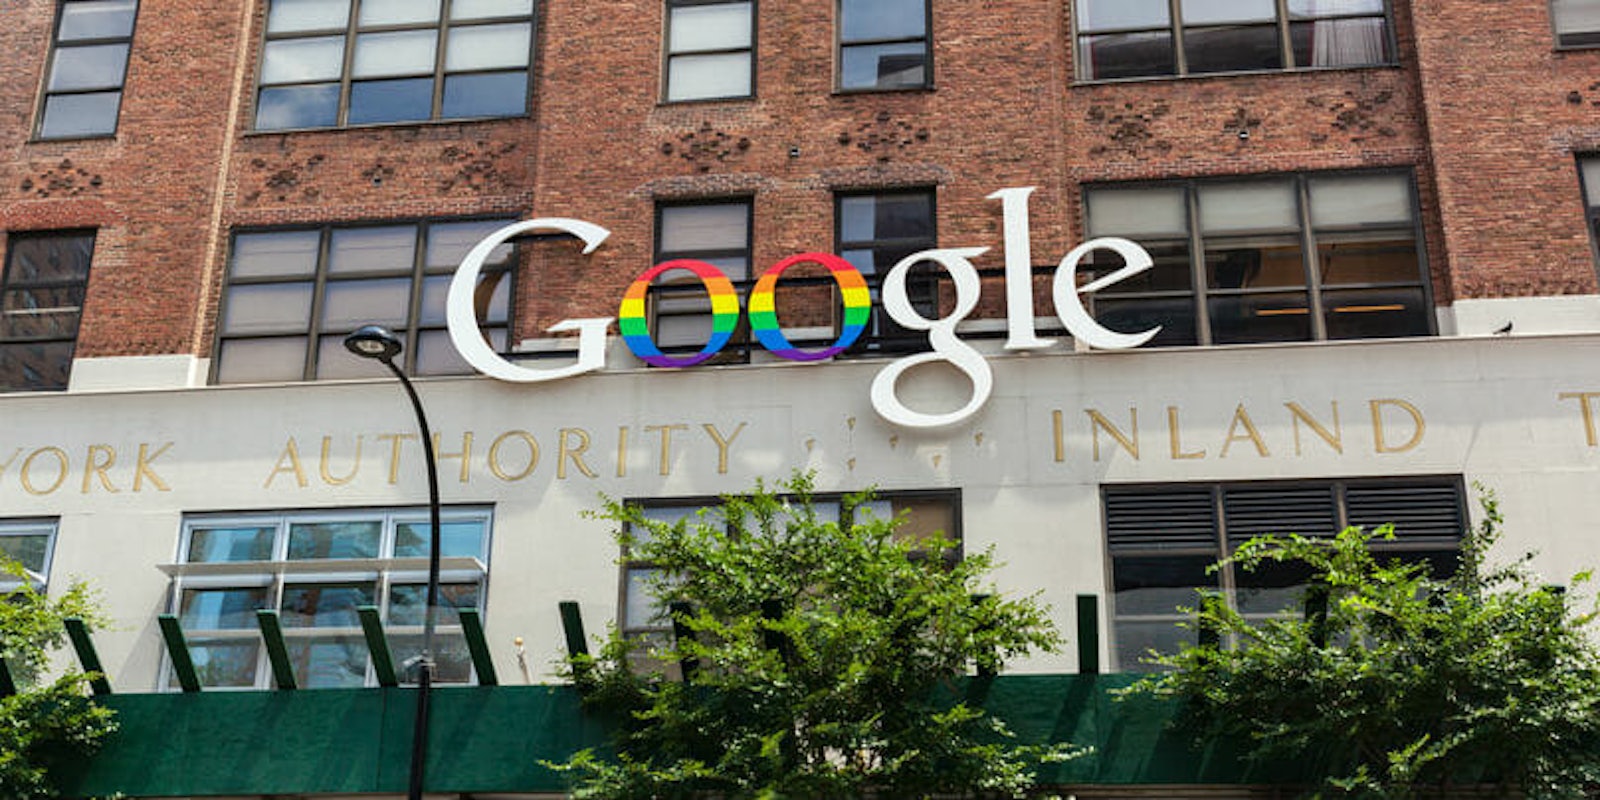 google headquarters building